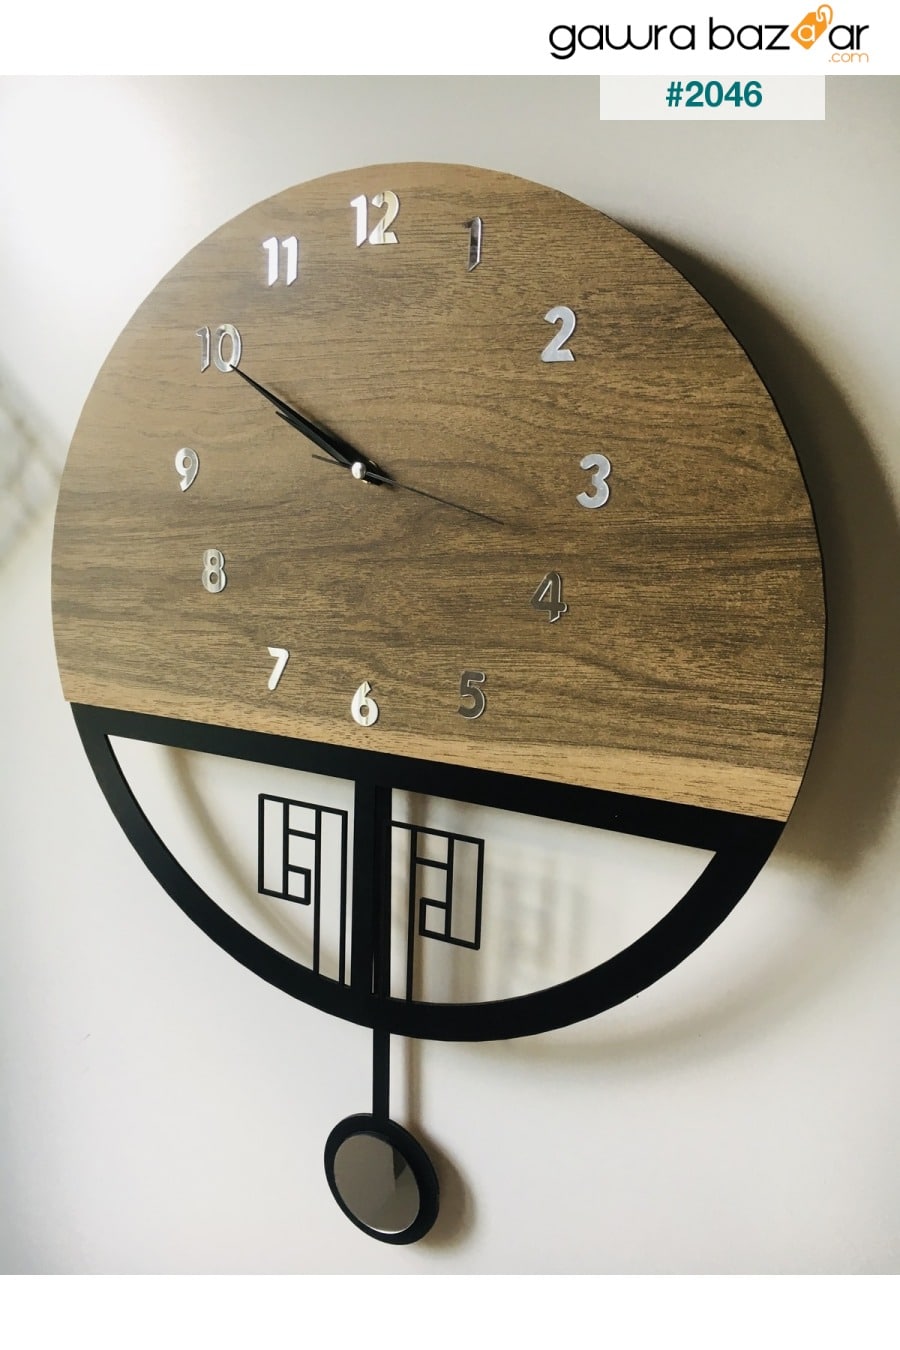 ساعة حائط خشبية بندول صامت ، ساعة بندول ، ساعة حائط ، ساعة حائط خشبية ، ساعة حائط بندول hayalevimahsap 3